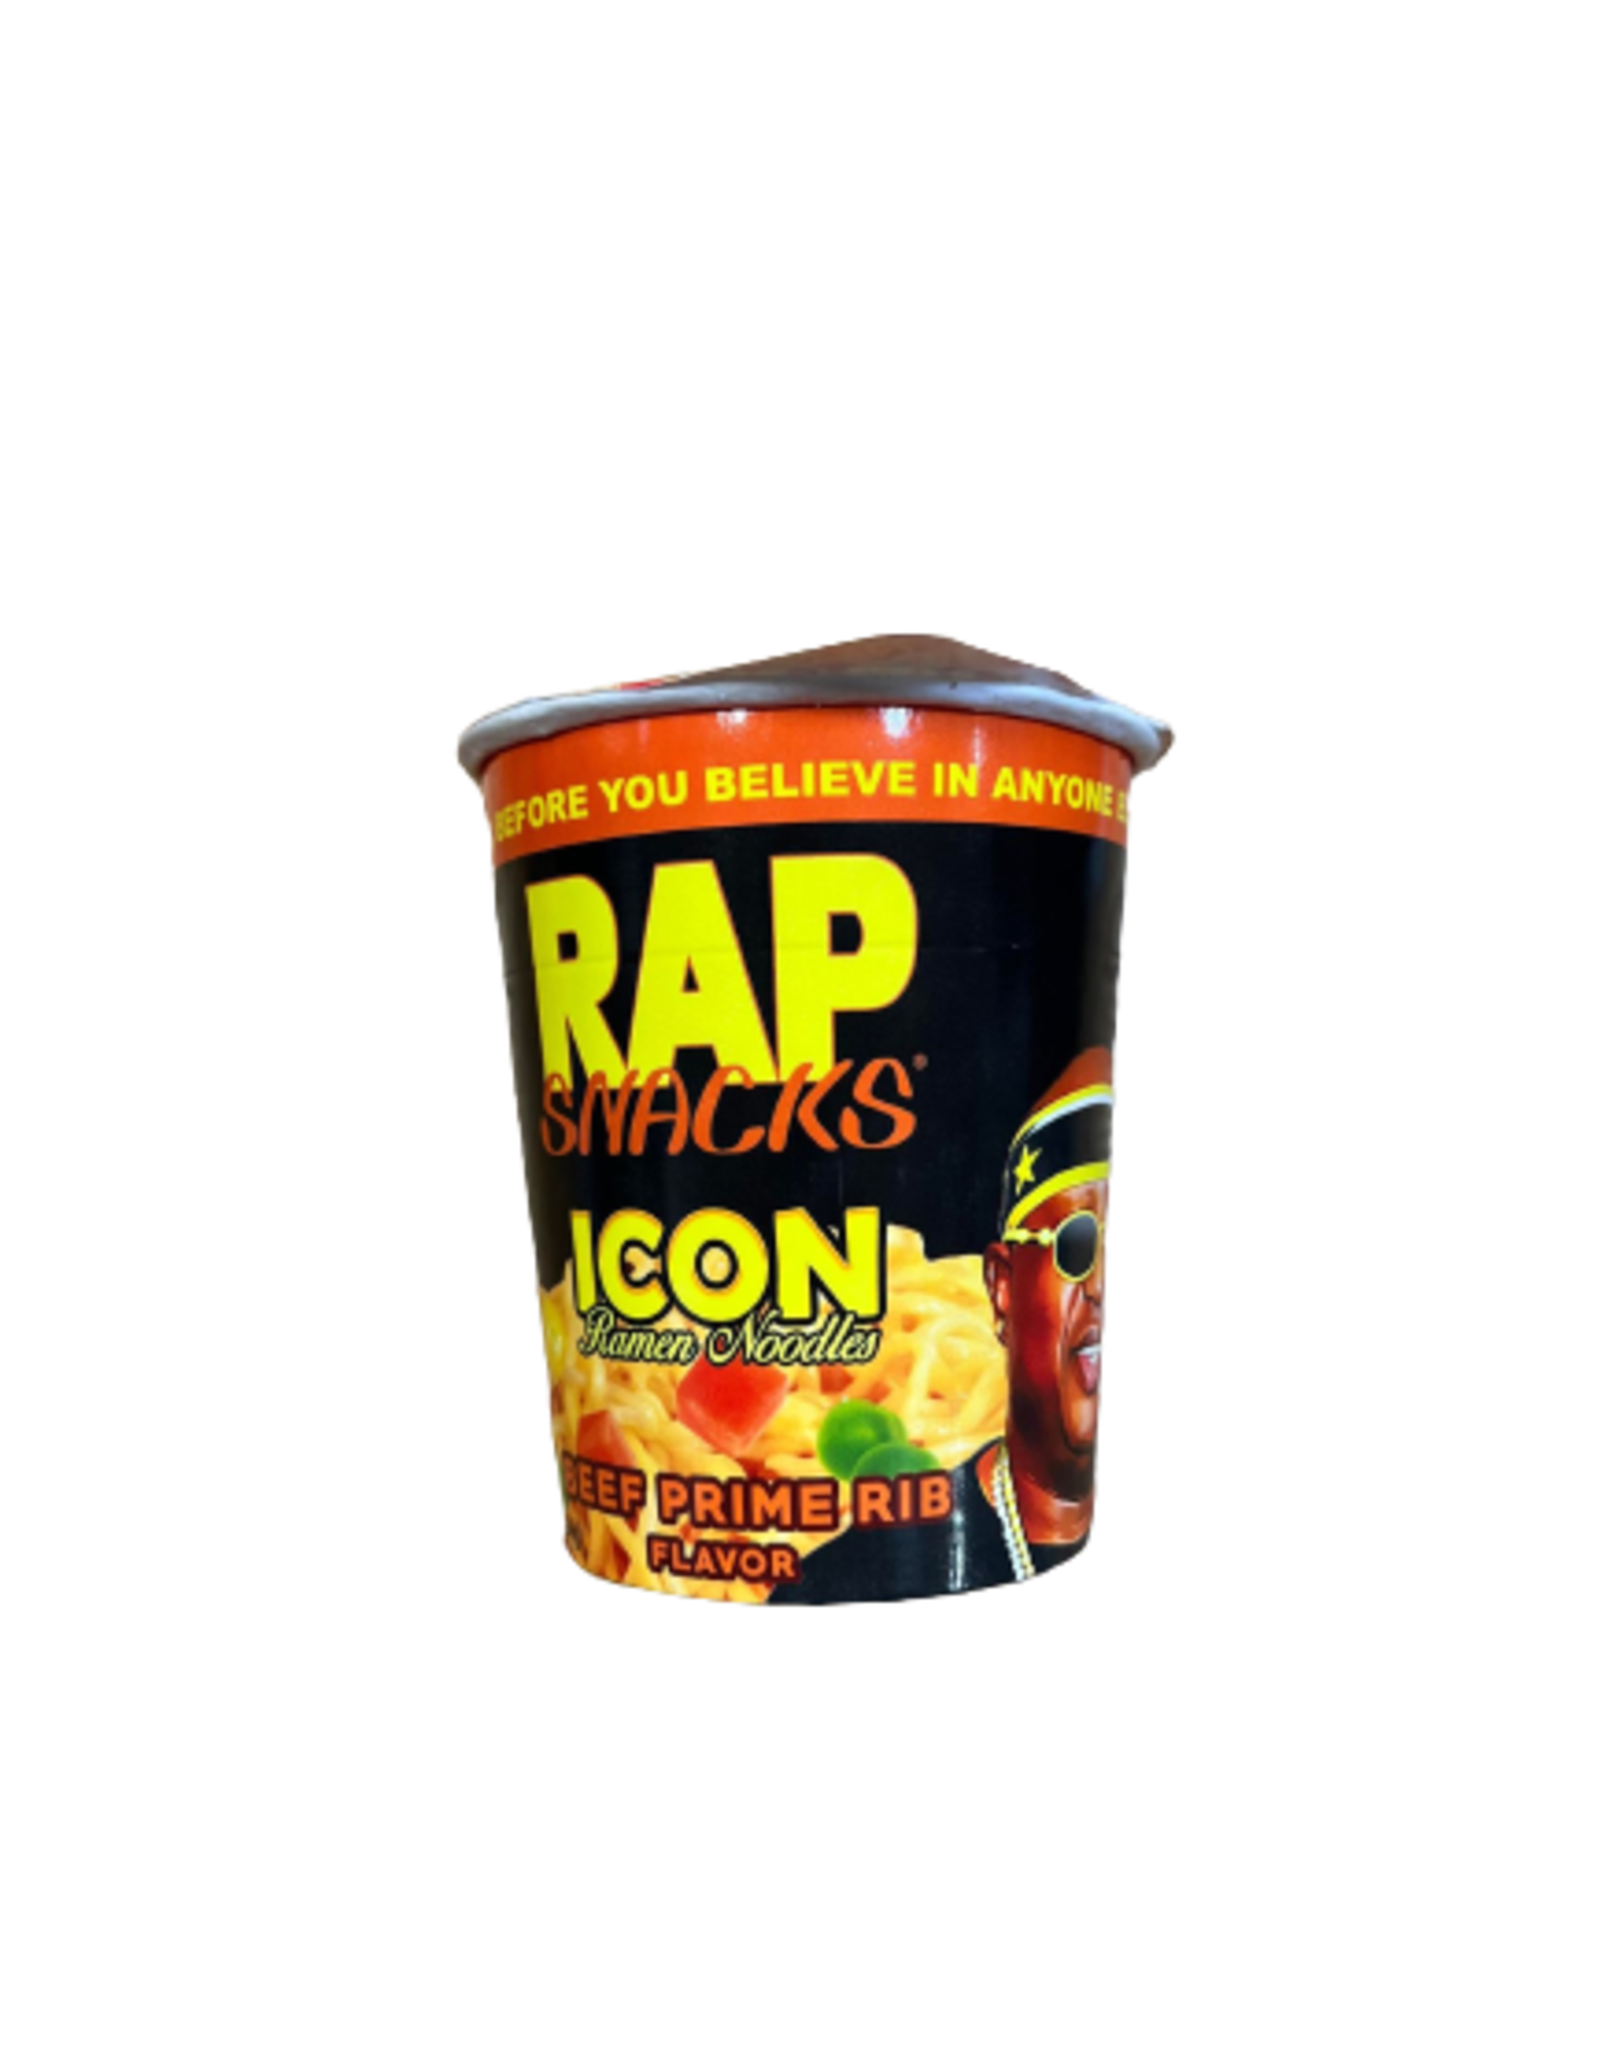 Rap Snacks Ramen Beef Prime Rib